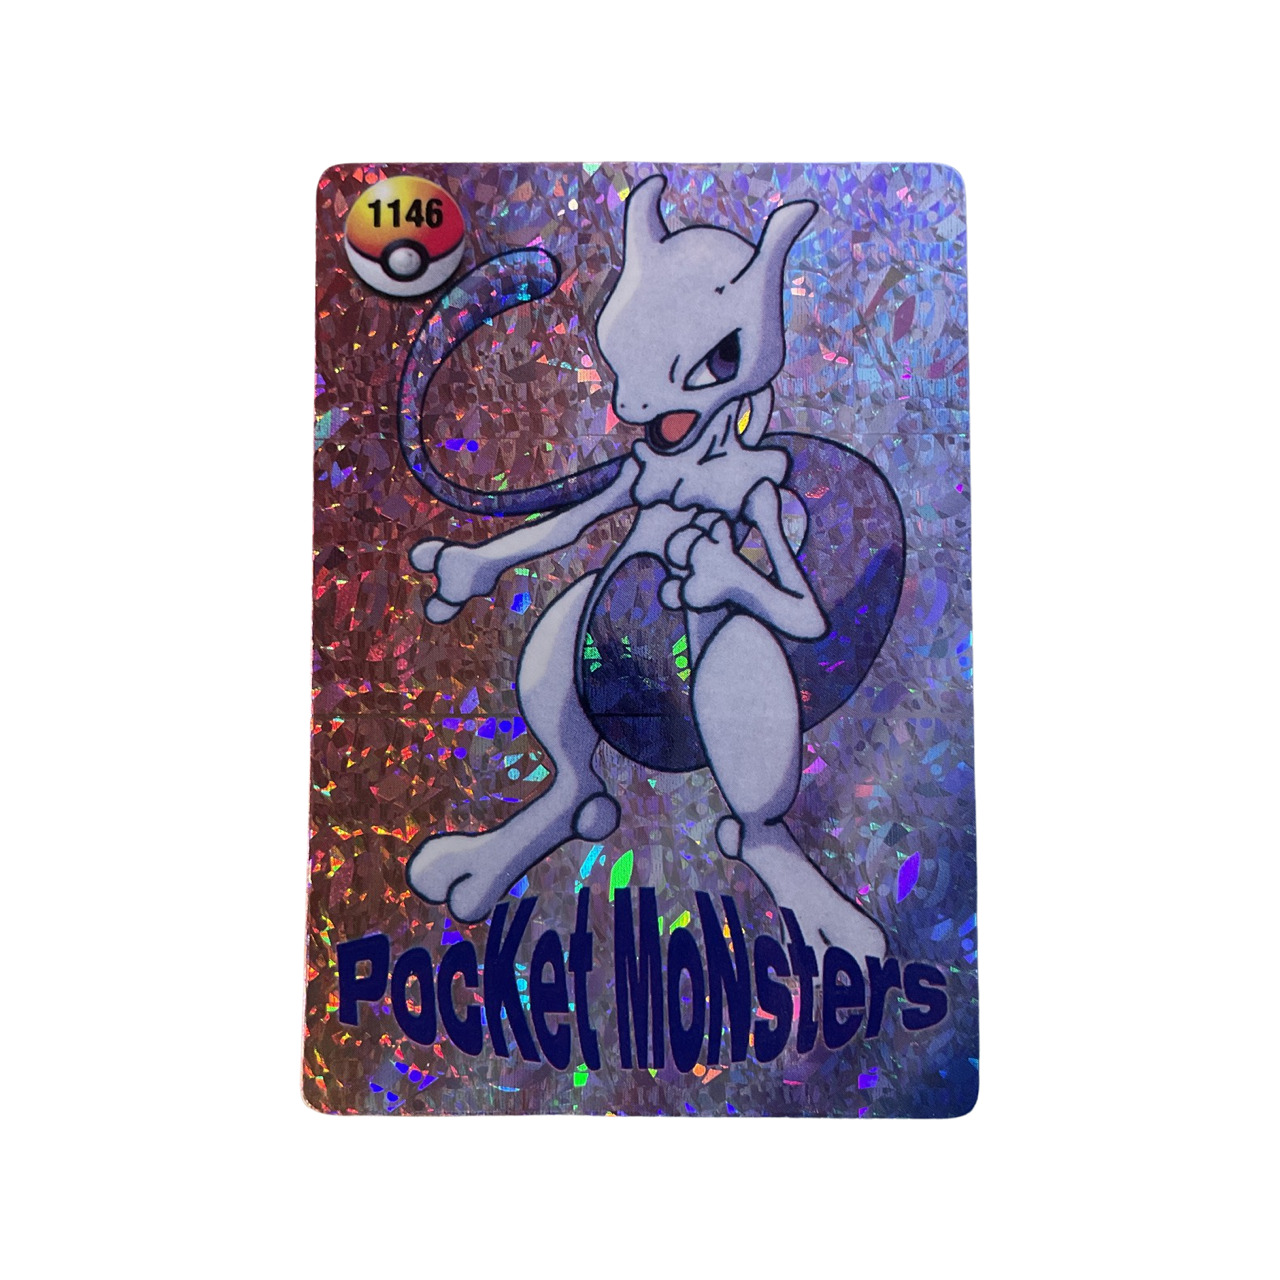 Mewtwo 1146 Vintage Pocket Monsters Vending Machine Sticker Card (mint)